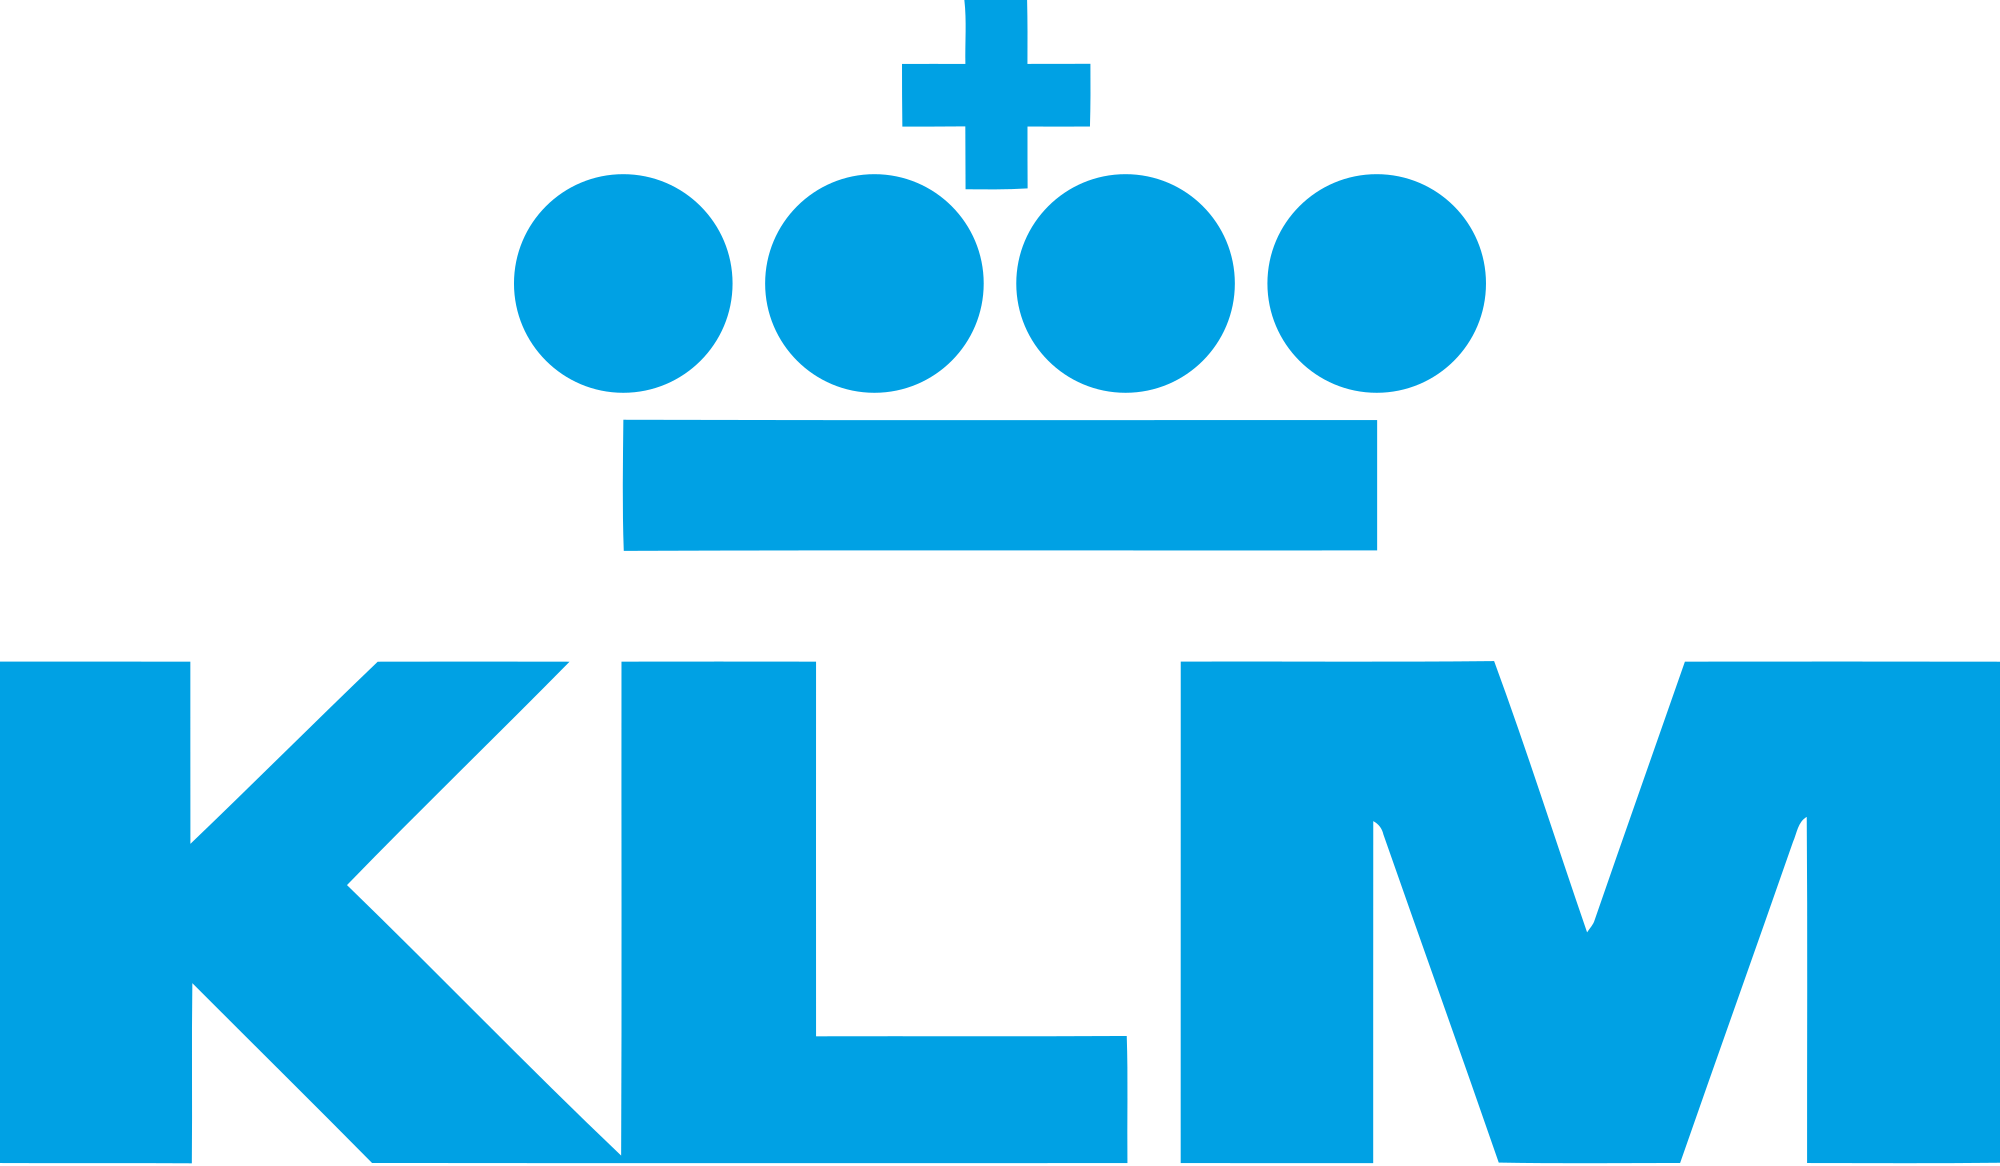 Resultado de imagen para klm logo